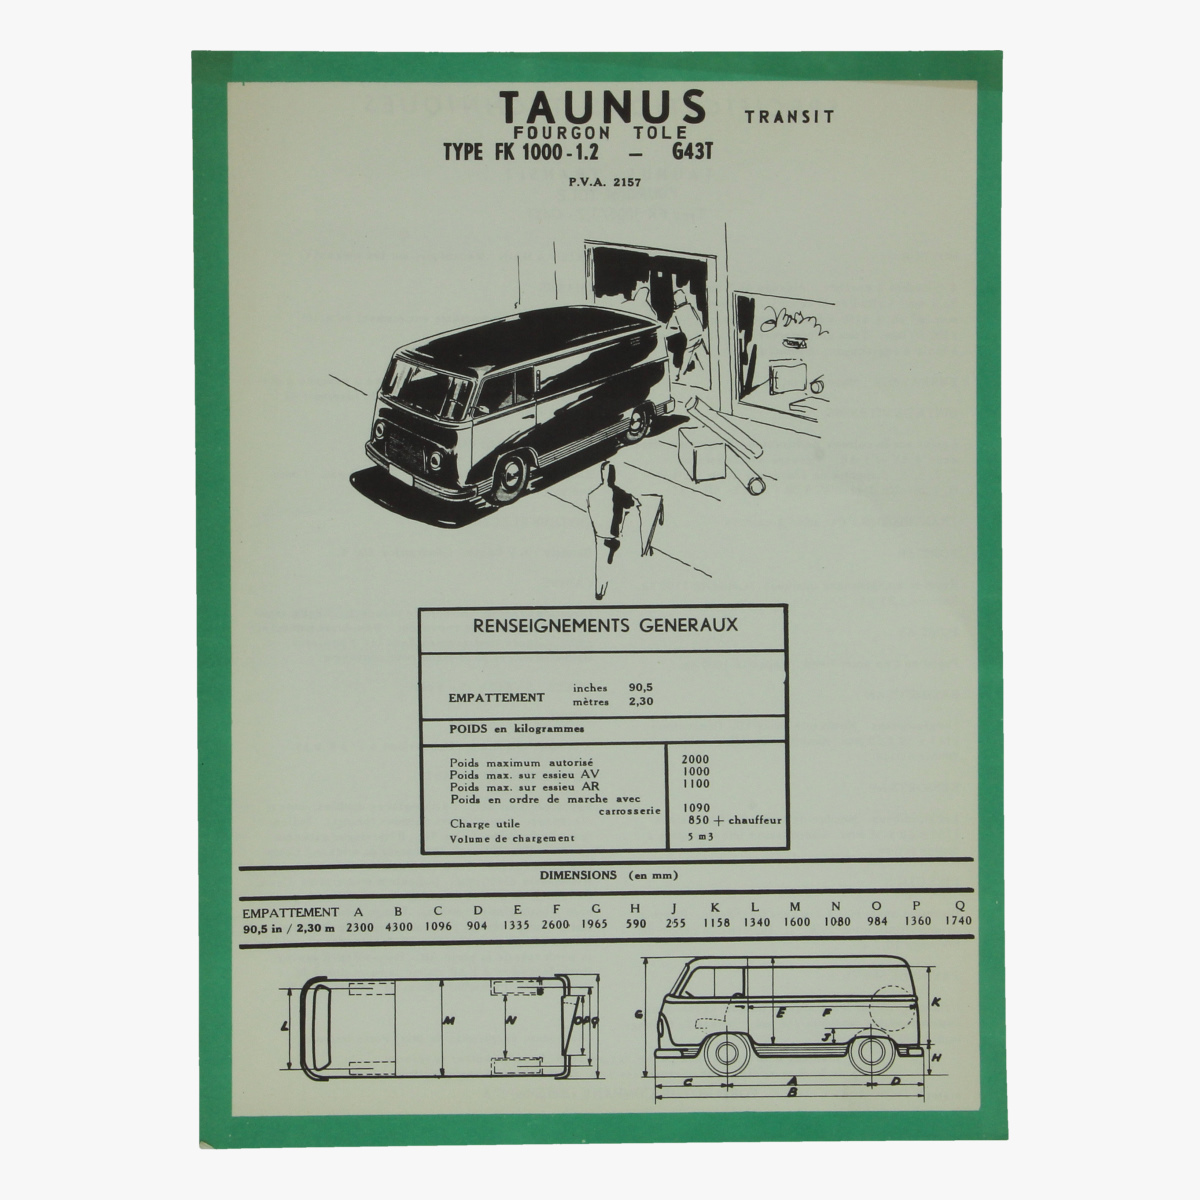 Afbeeldingen van specifications techniques taunus transit fourgon tole type fk 1000 ford motor company